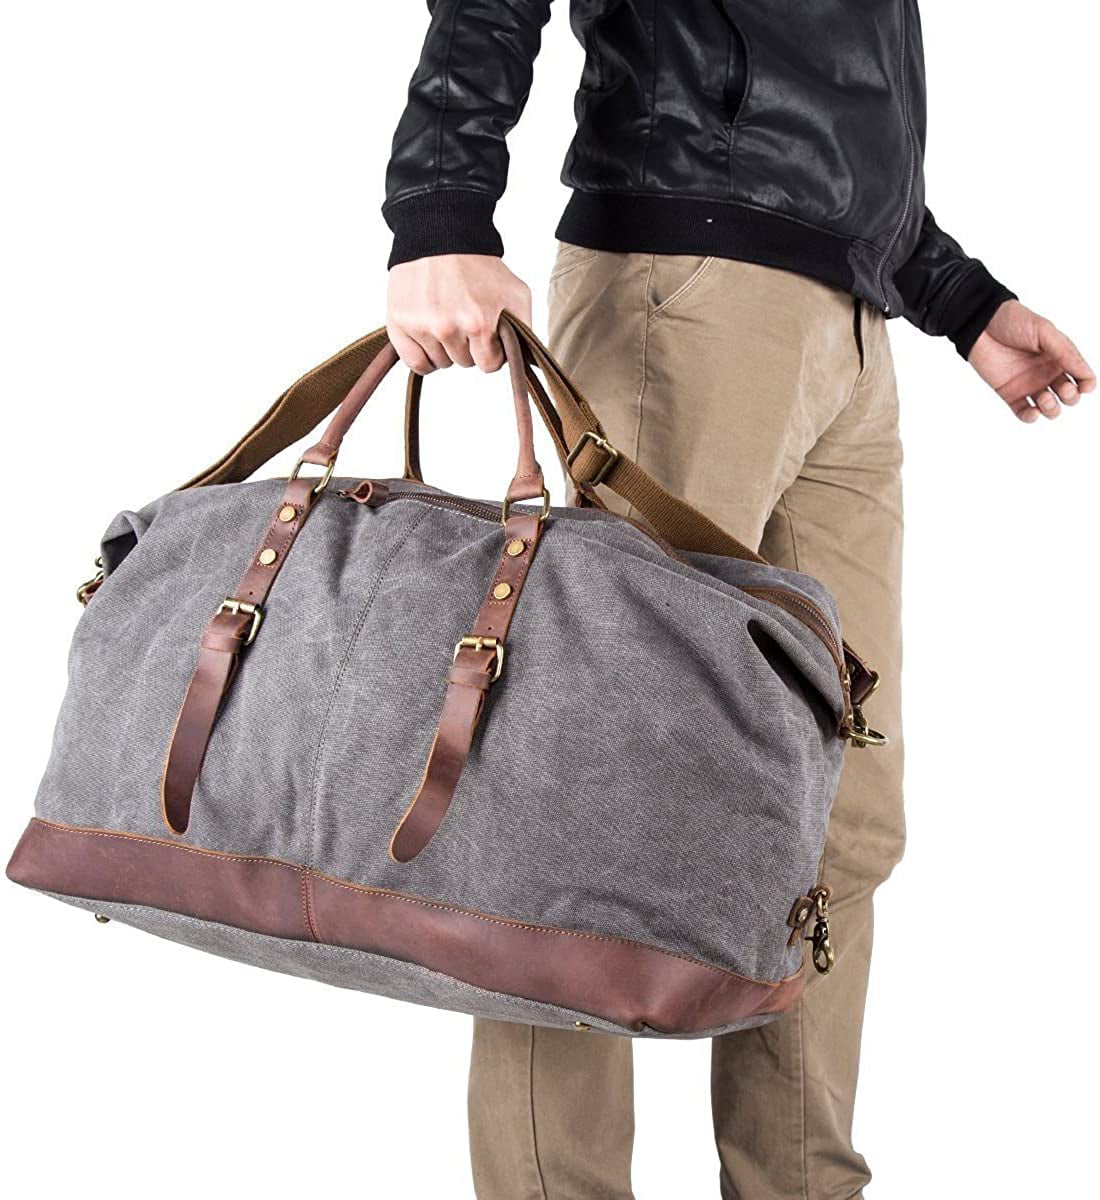 BAOSHA Canvas PU Leather Travel Tote Duffel Bag Carry on Bag Weekender Overnight Bag 